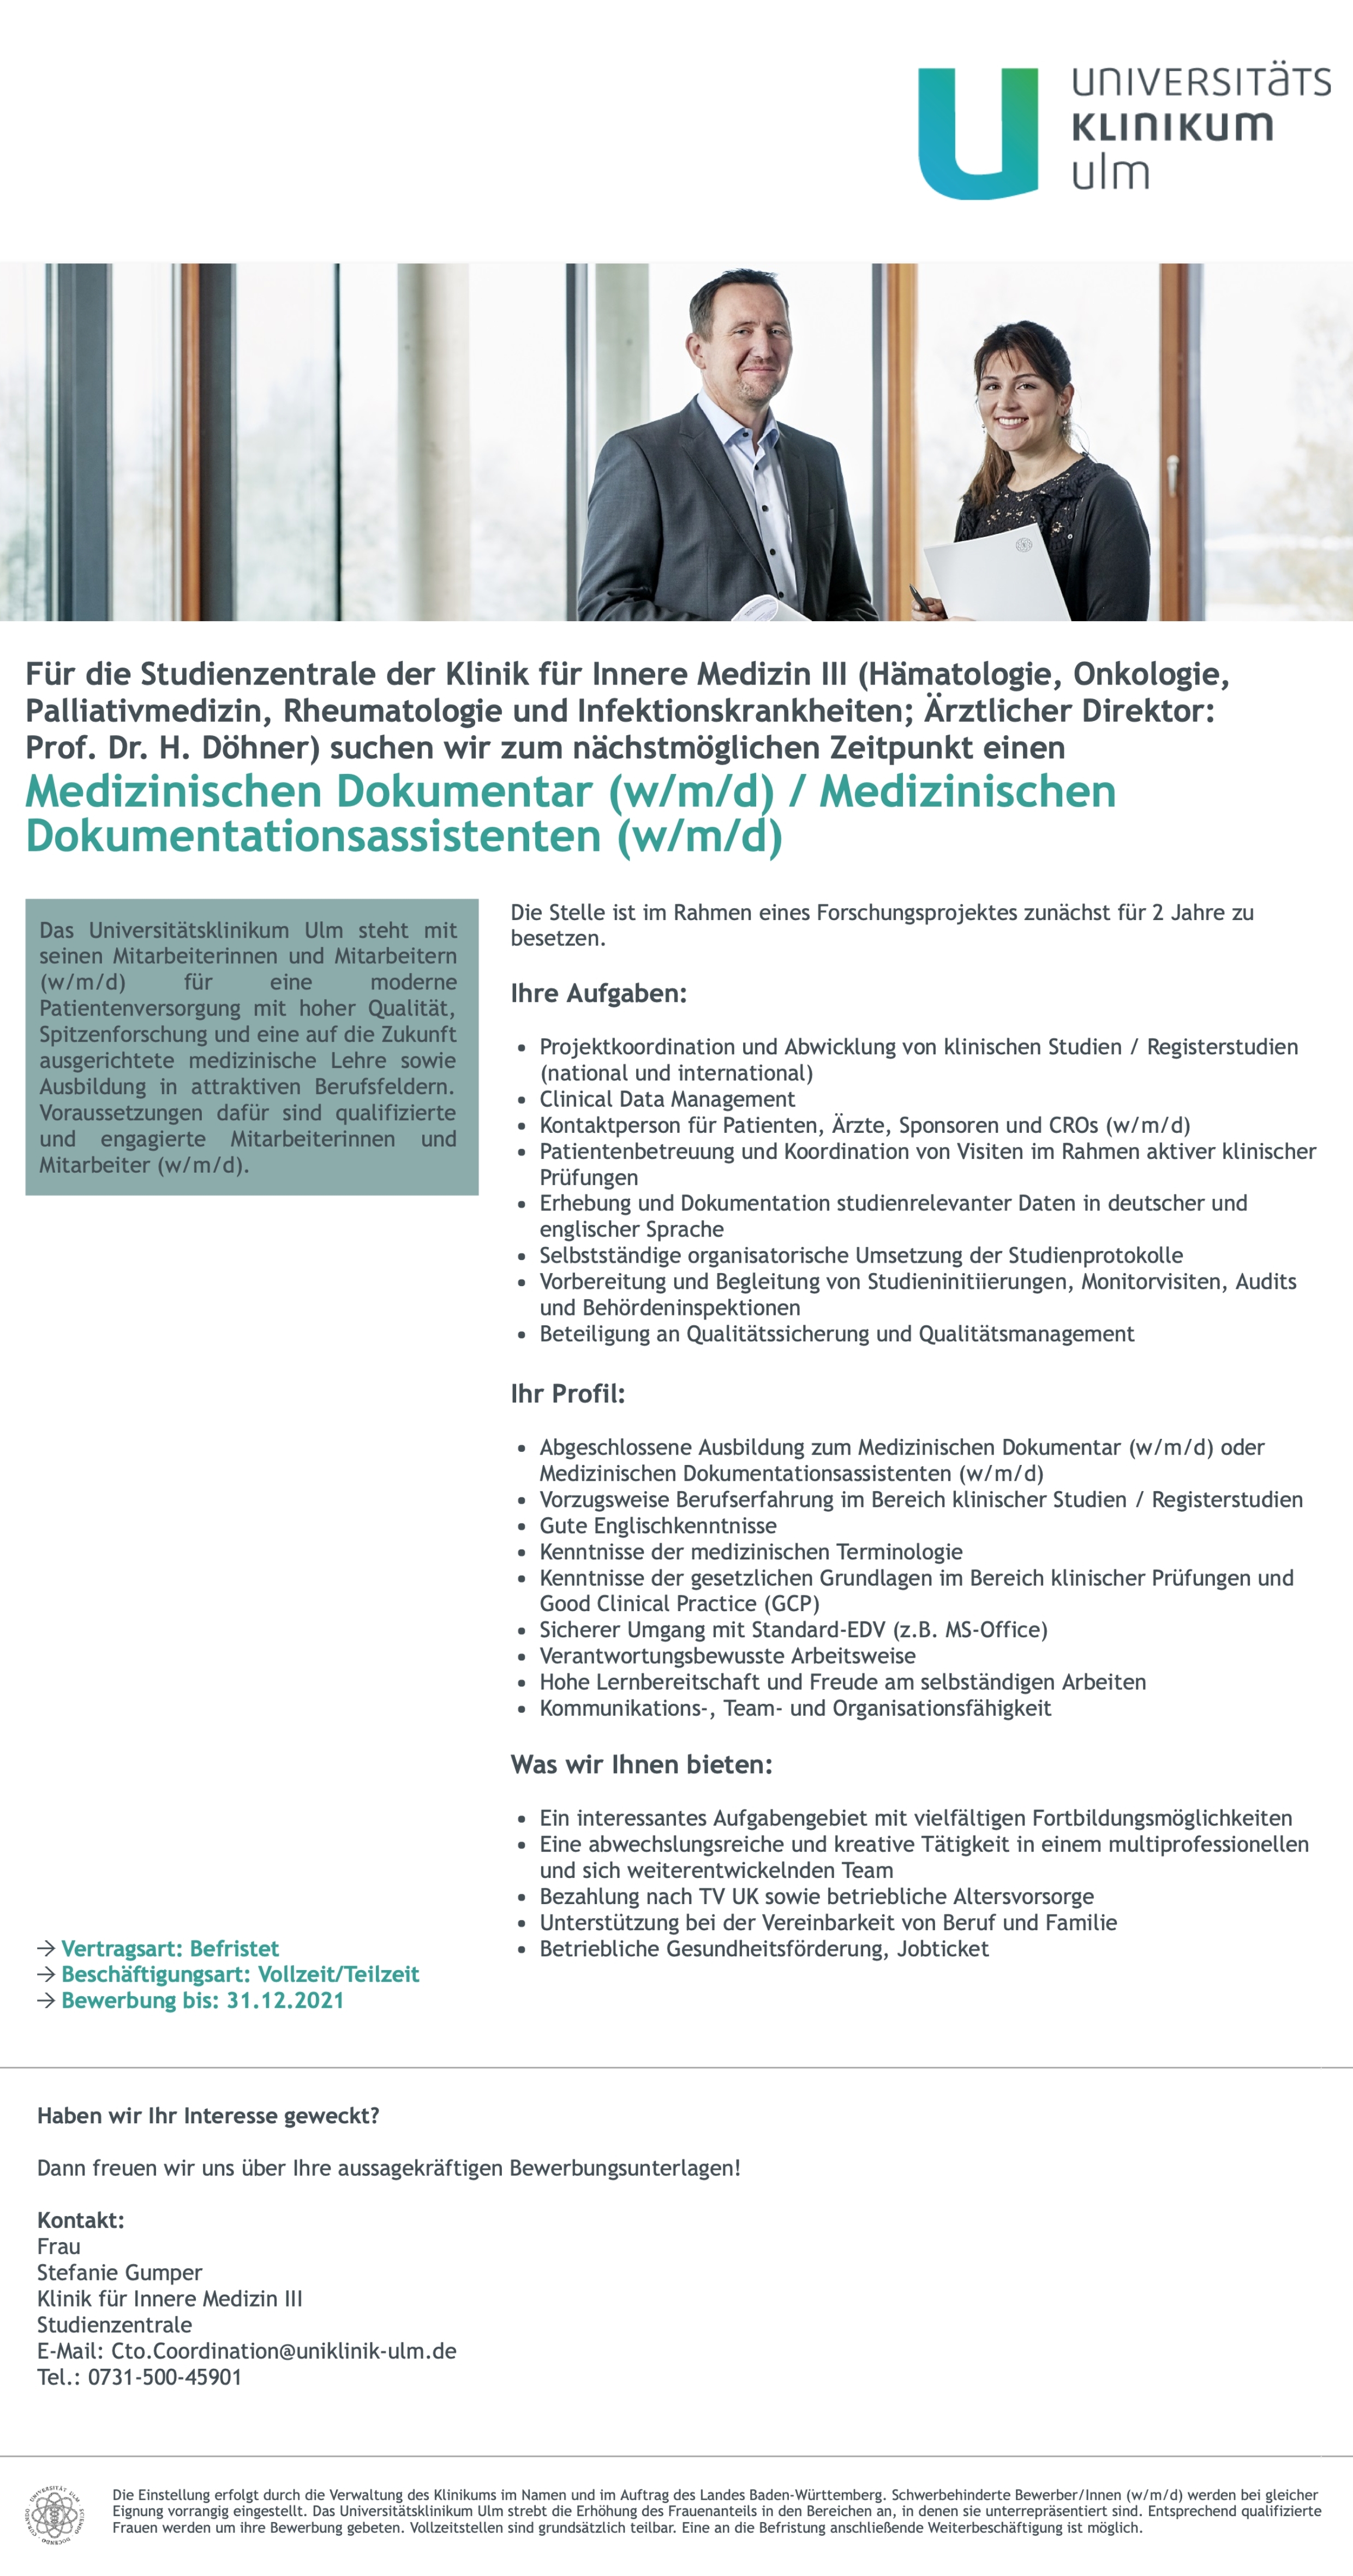 Medizinischer Dokumentar (w/m/d) / Medizinischer Dokumentationsassistent (w/m/d)